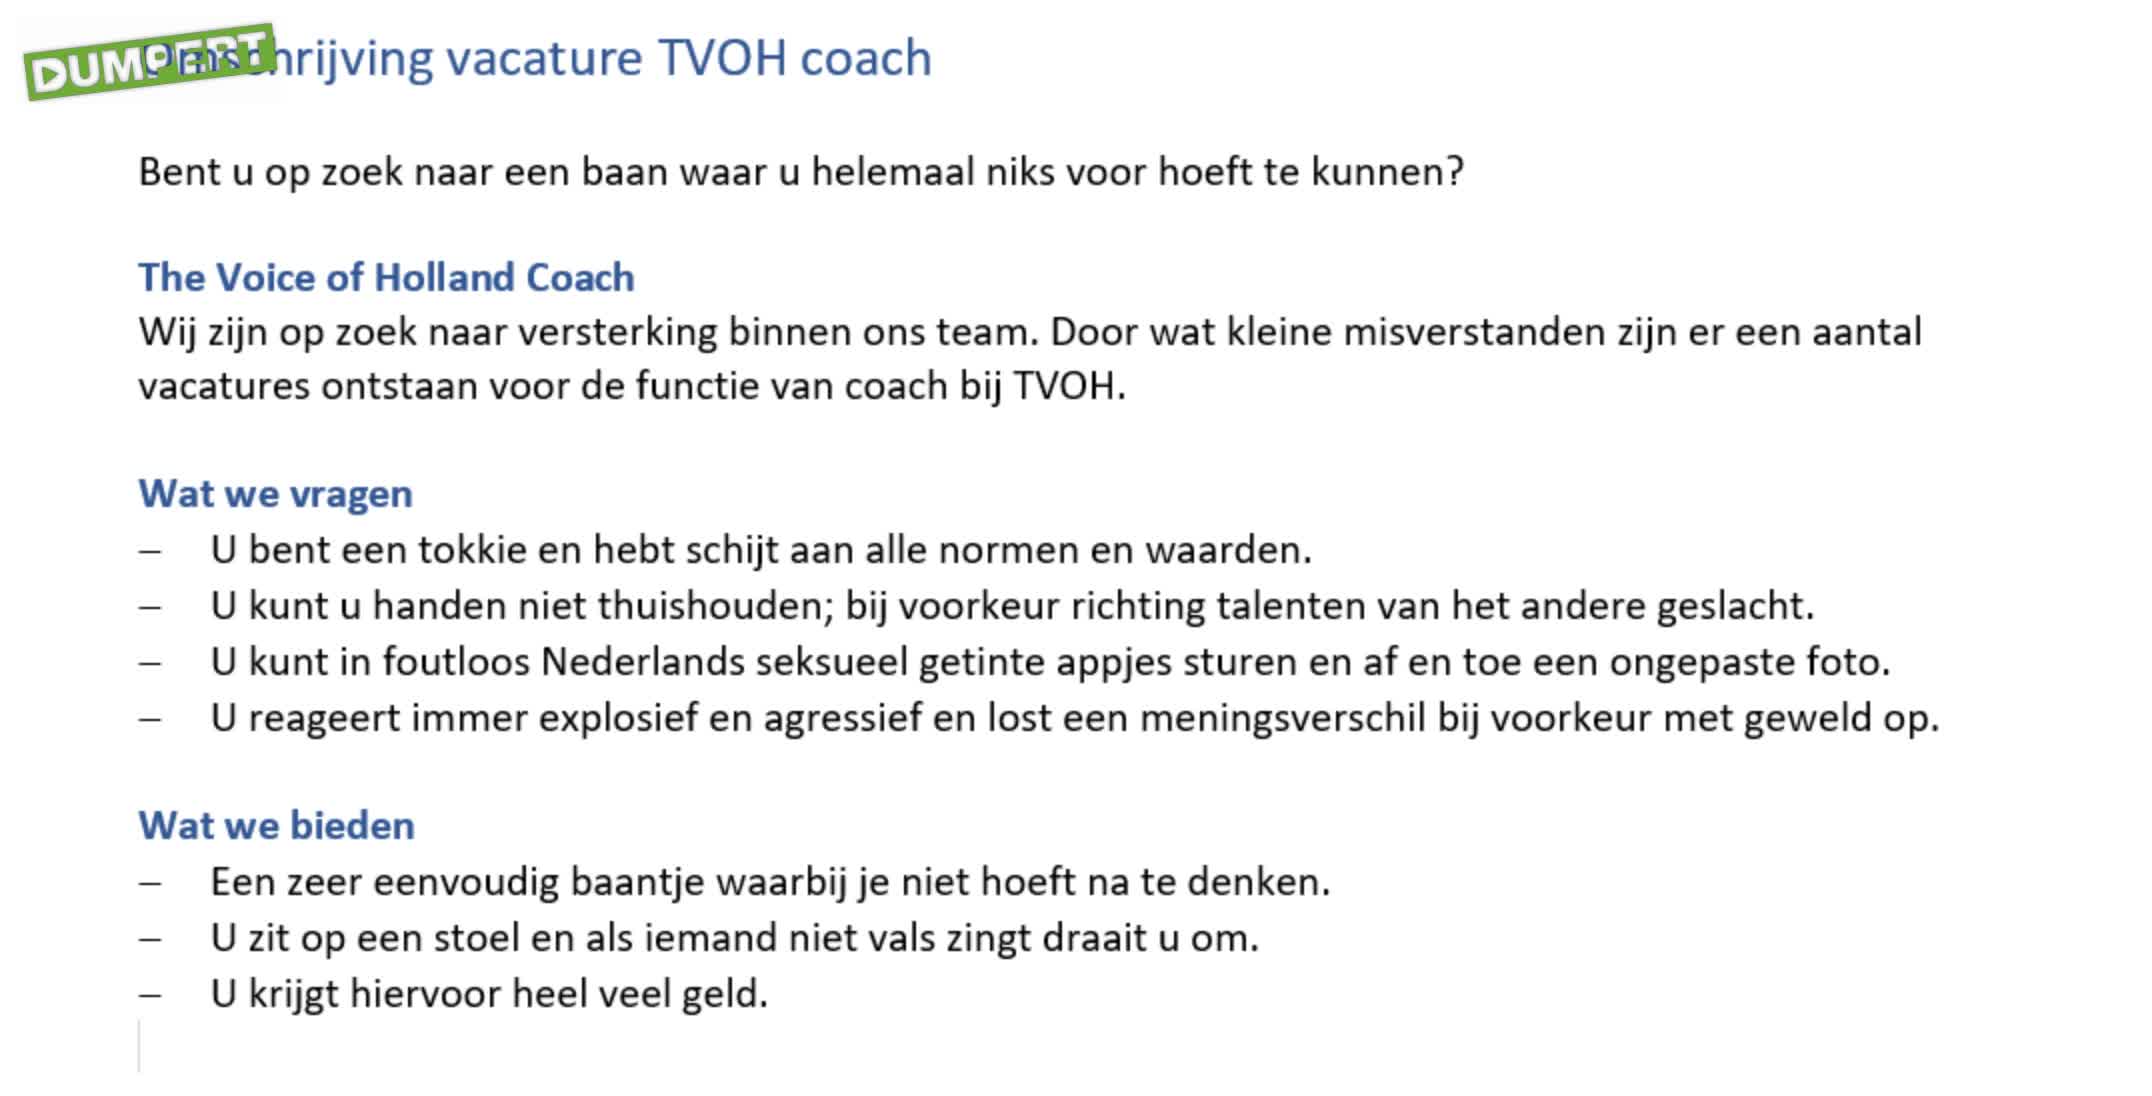 Vacature TVOH coach 